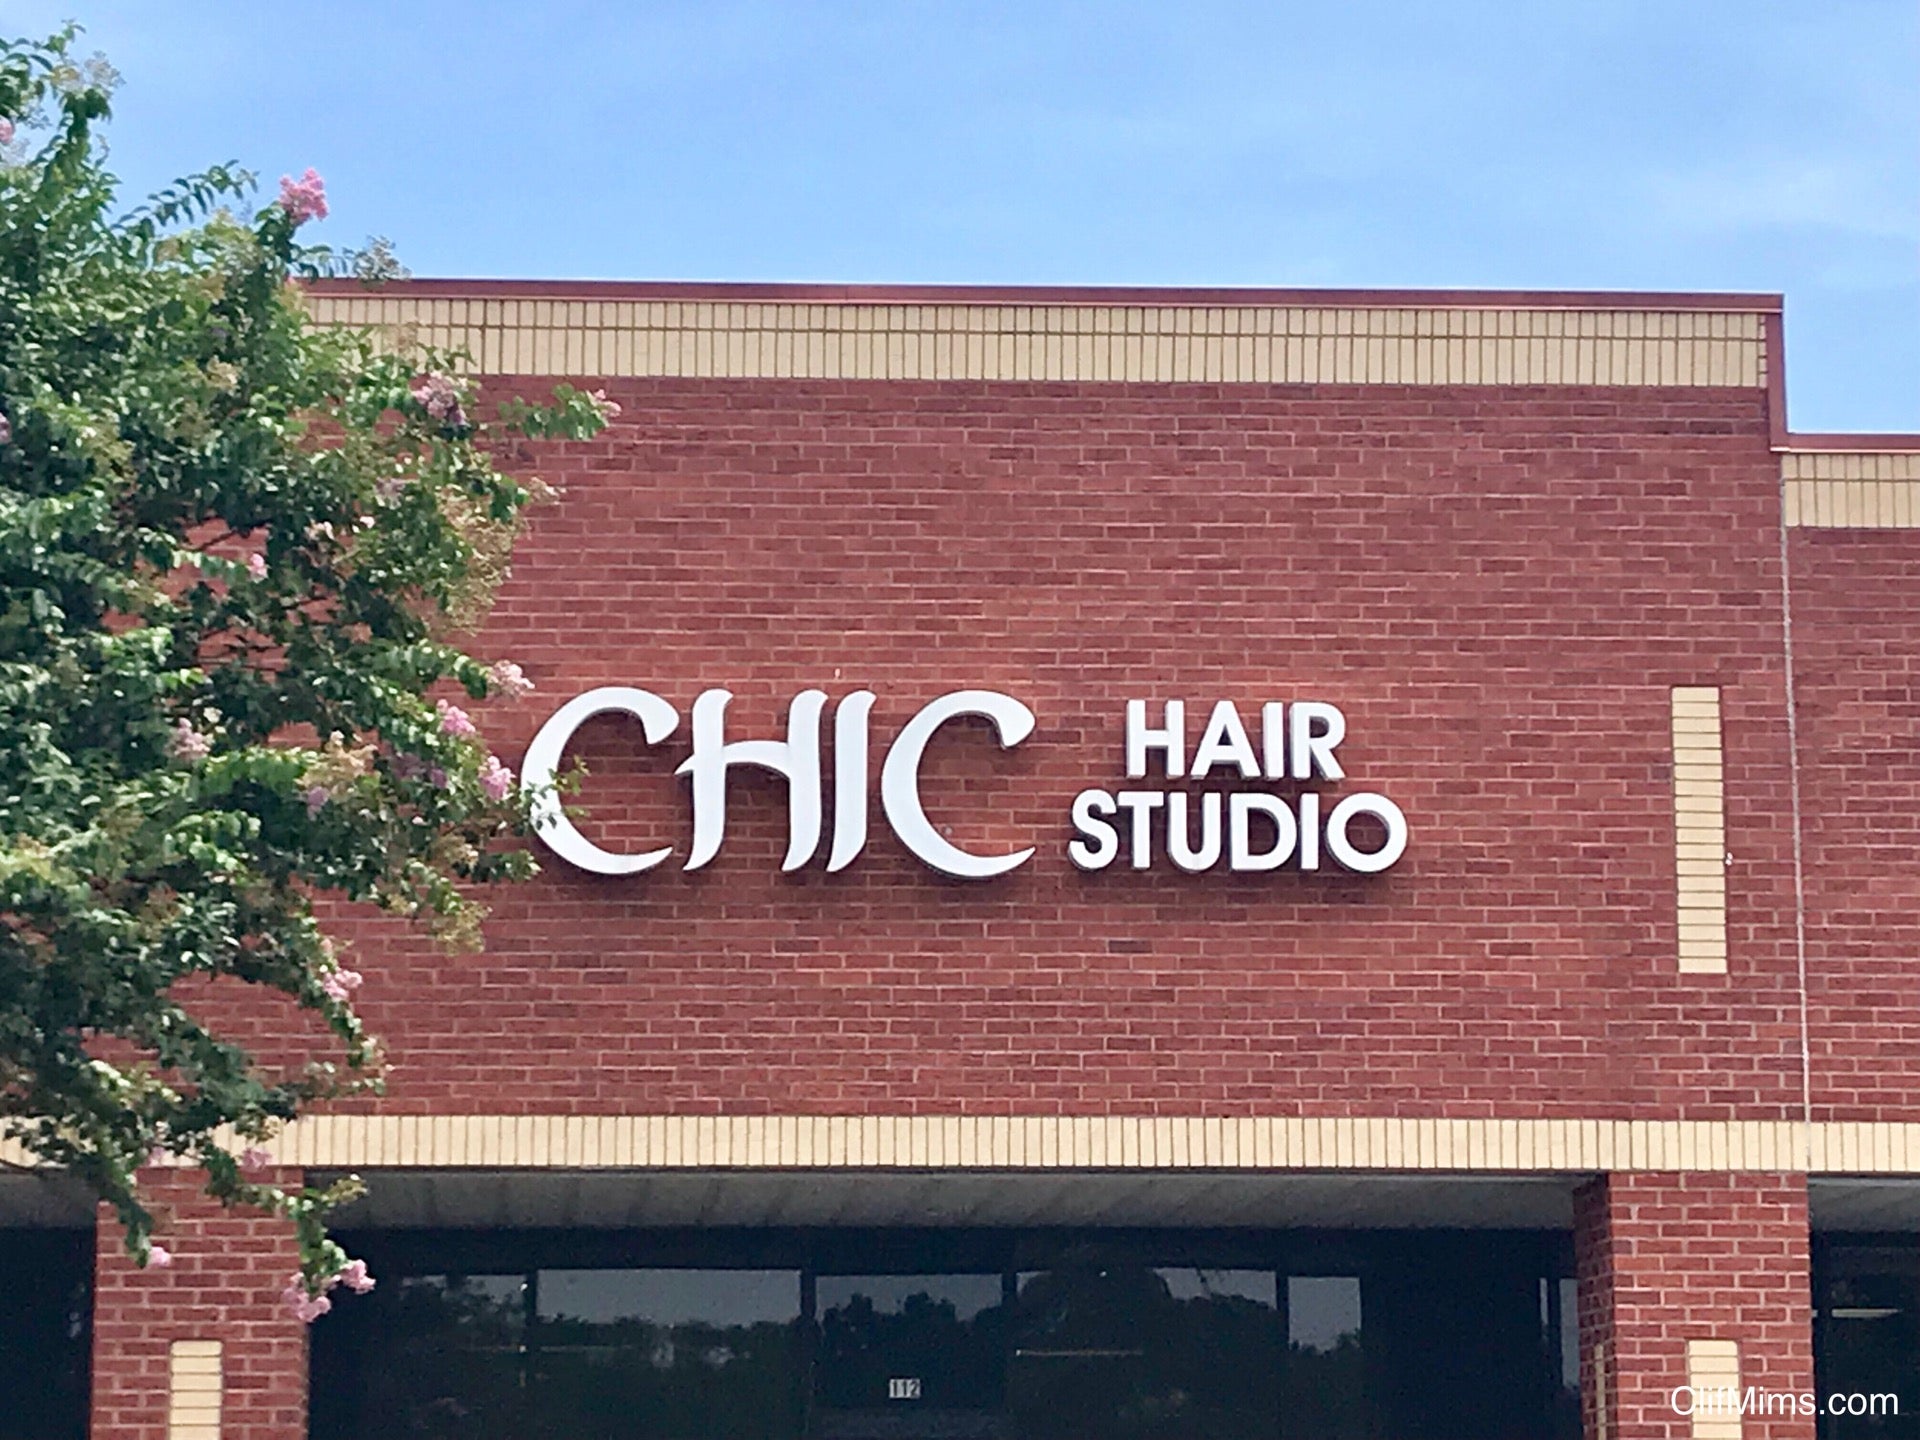 Chic Hair Studio 11125 US-70, Arlington Tennessee 38002